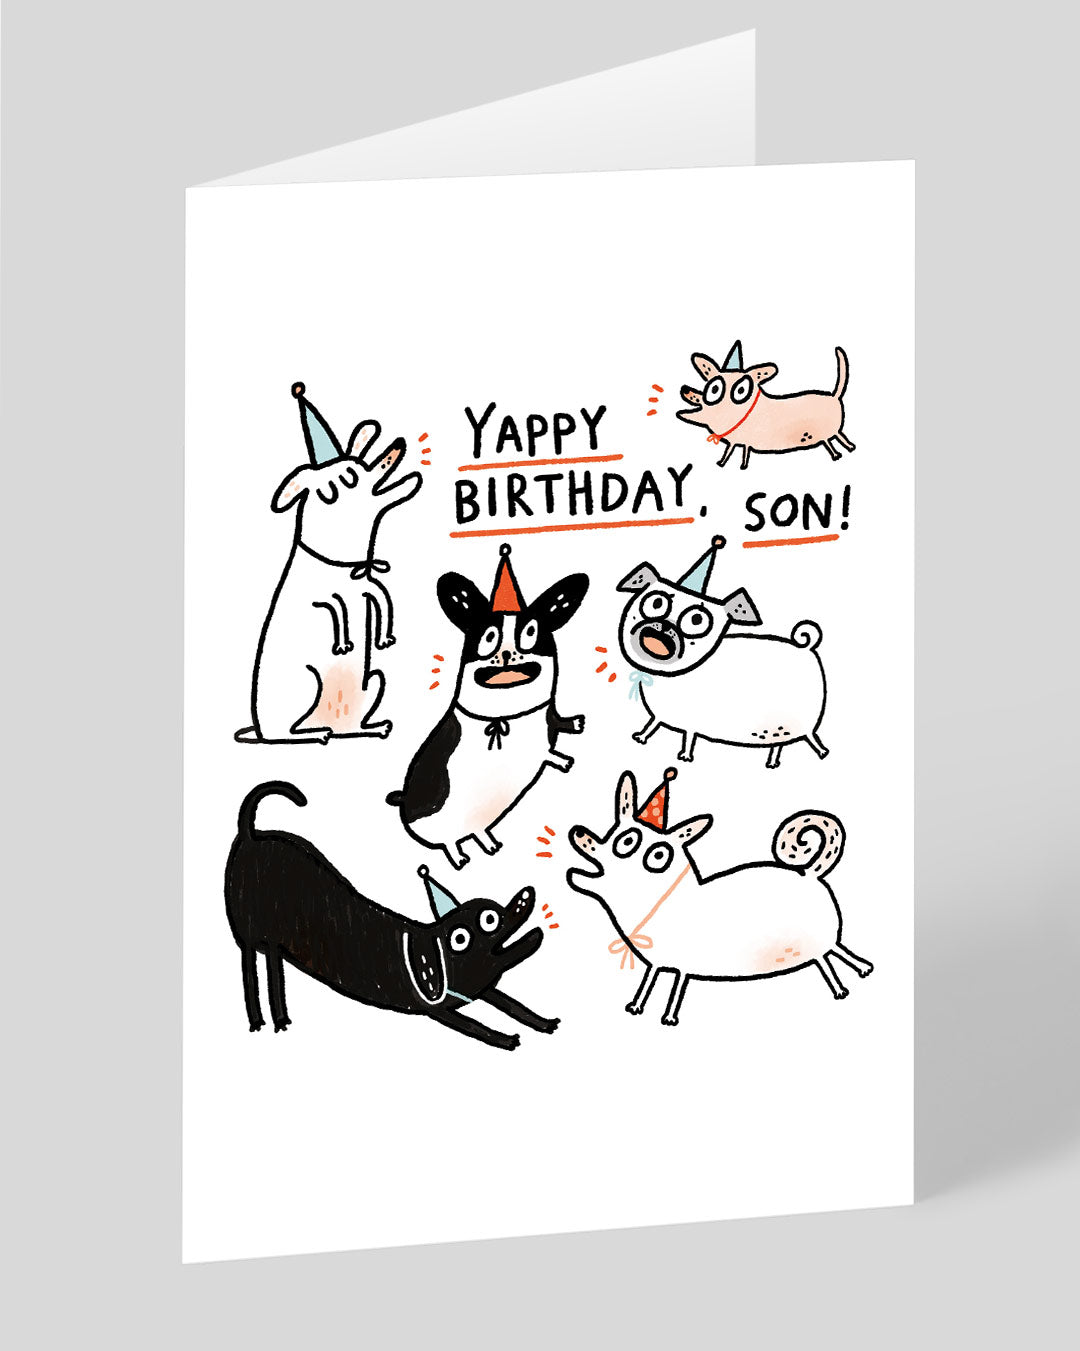 Funny Birthday Card for Son Yappy Birthday Son Greeting Card